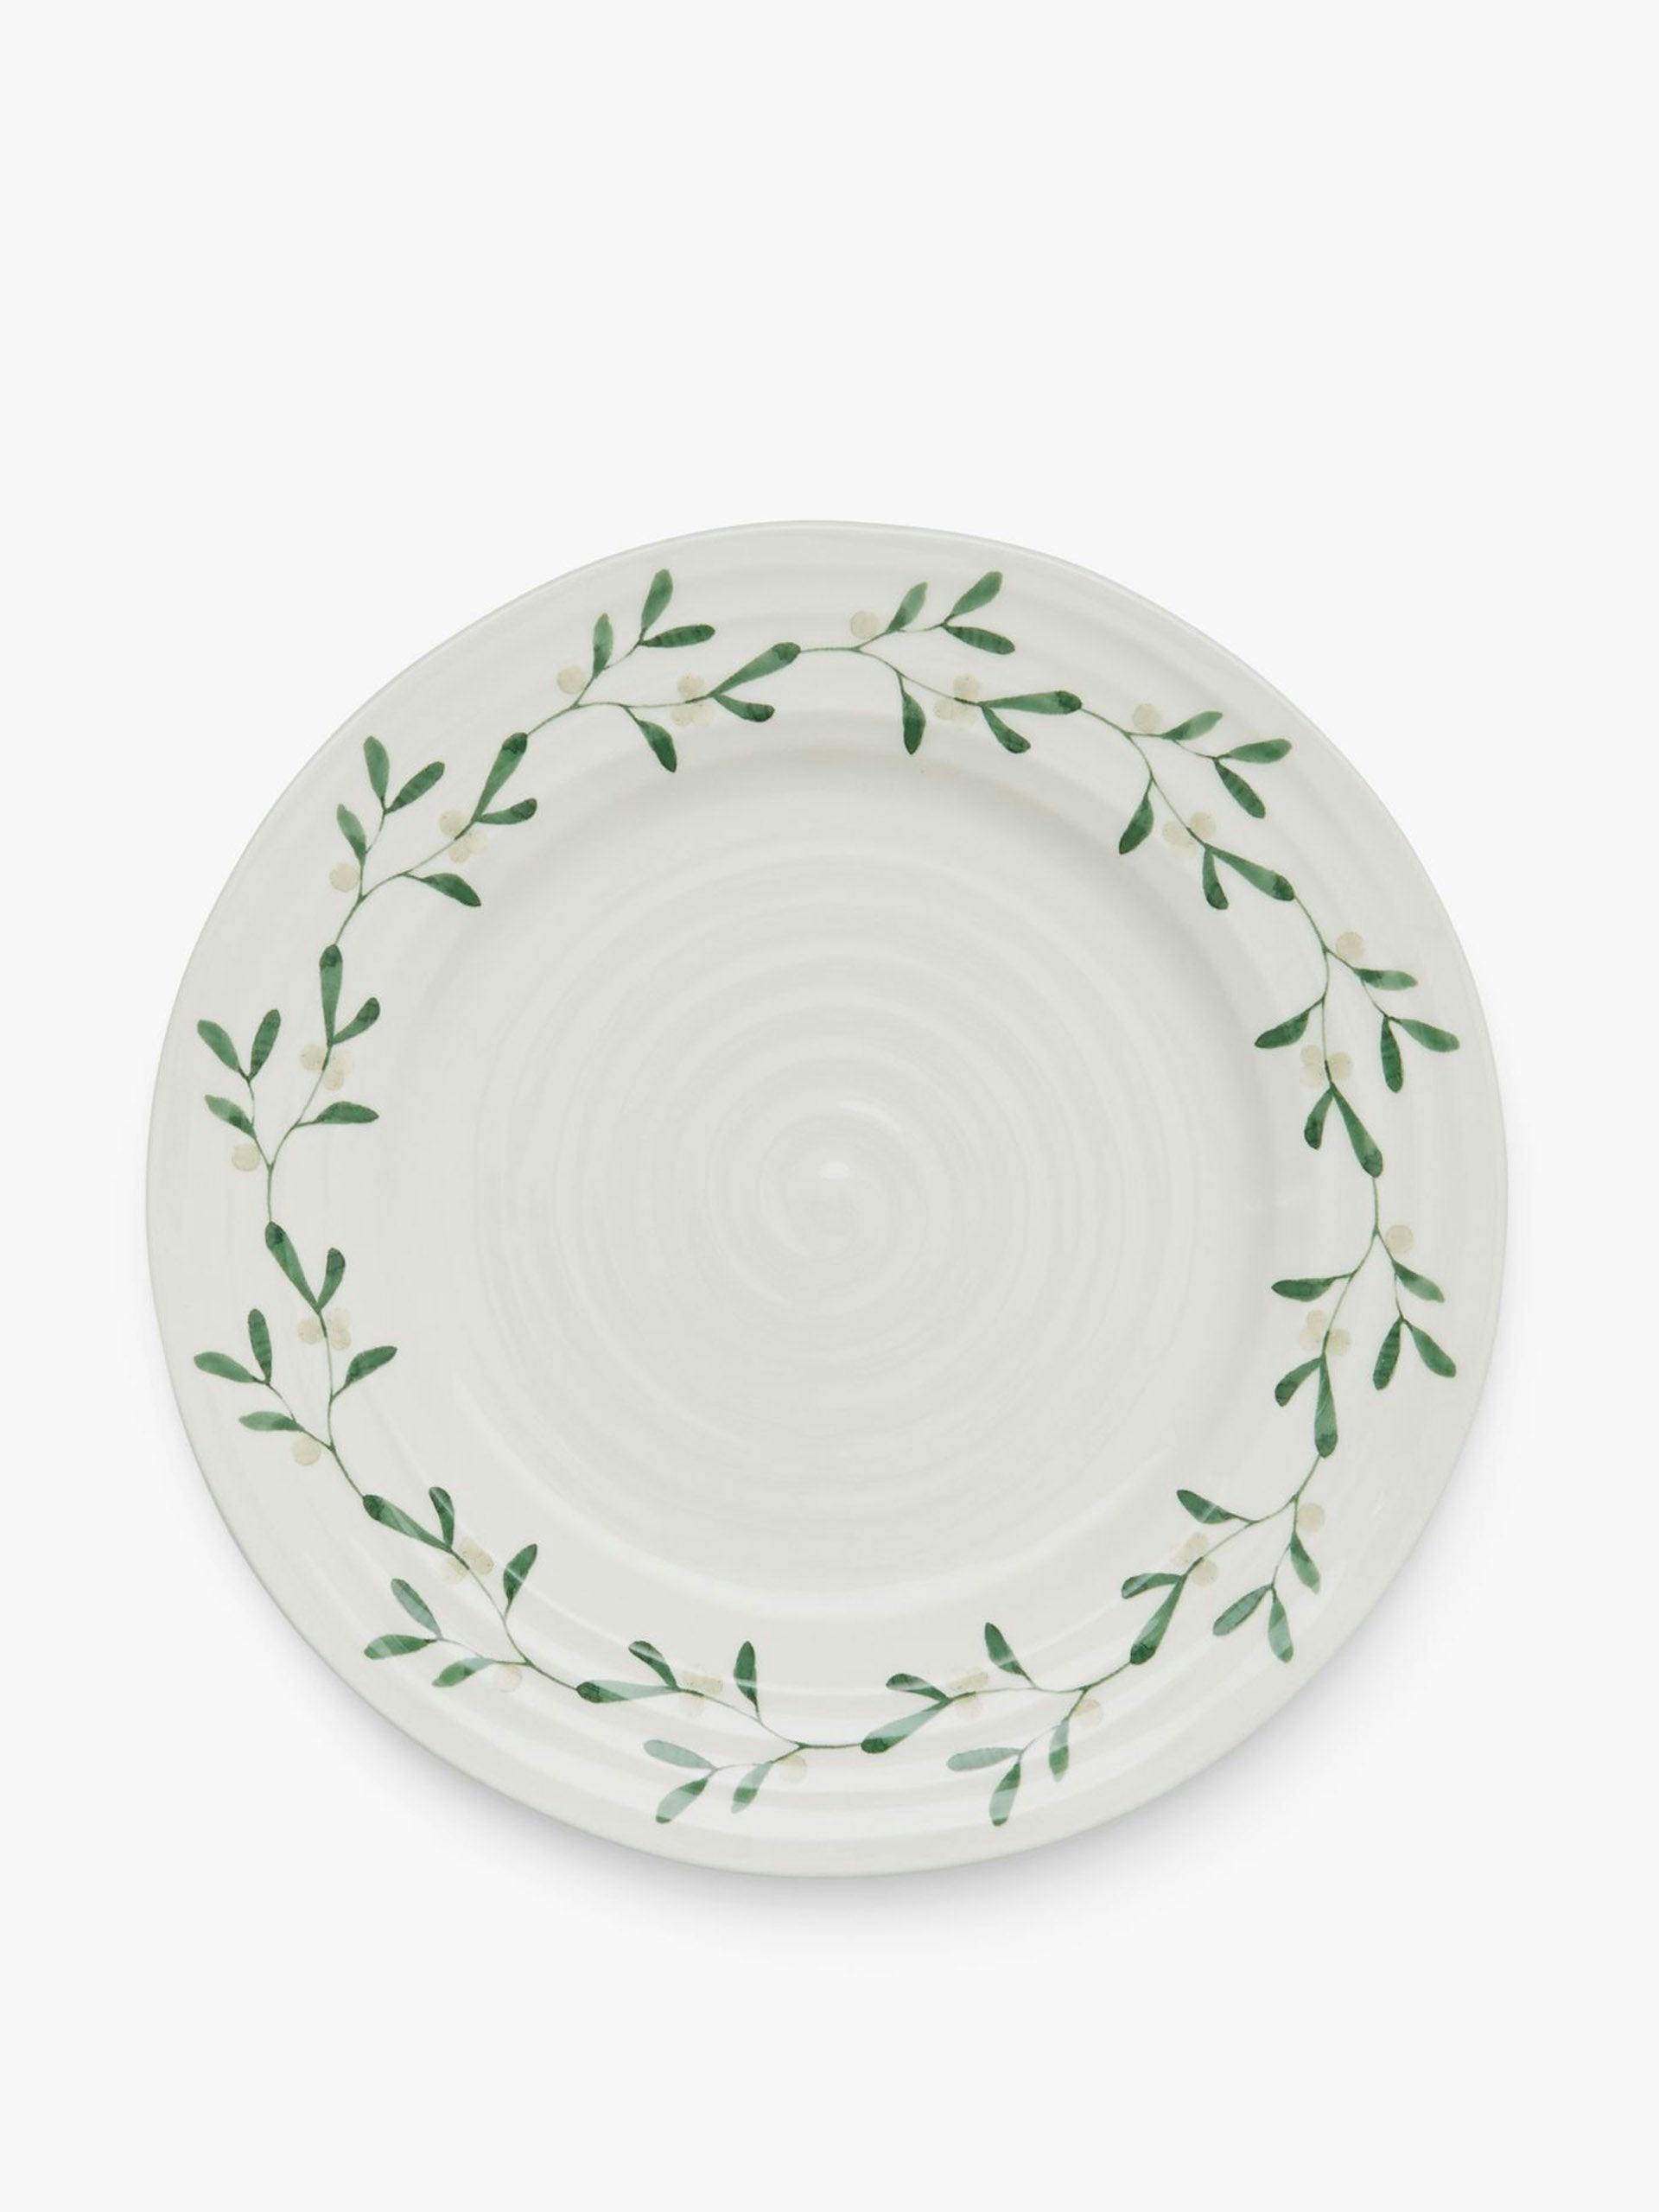 Mistletoe porcelain side plate